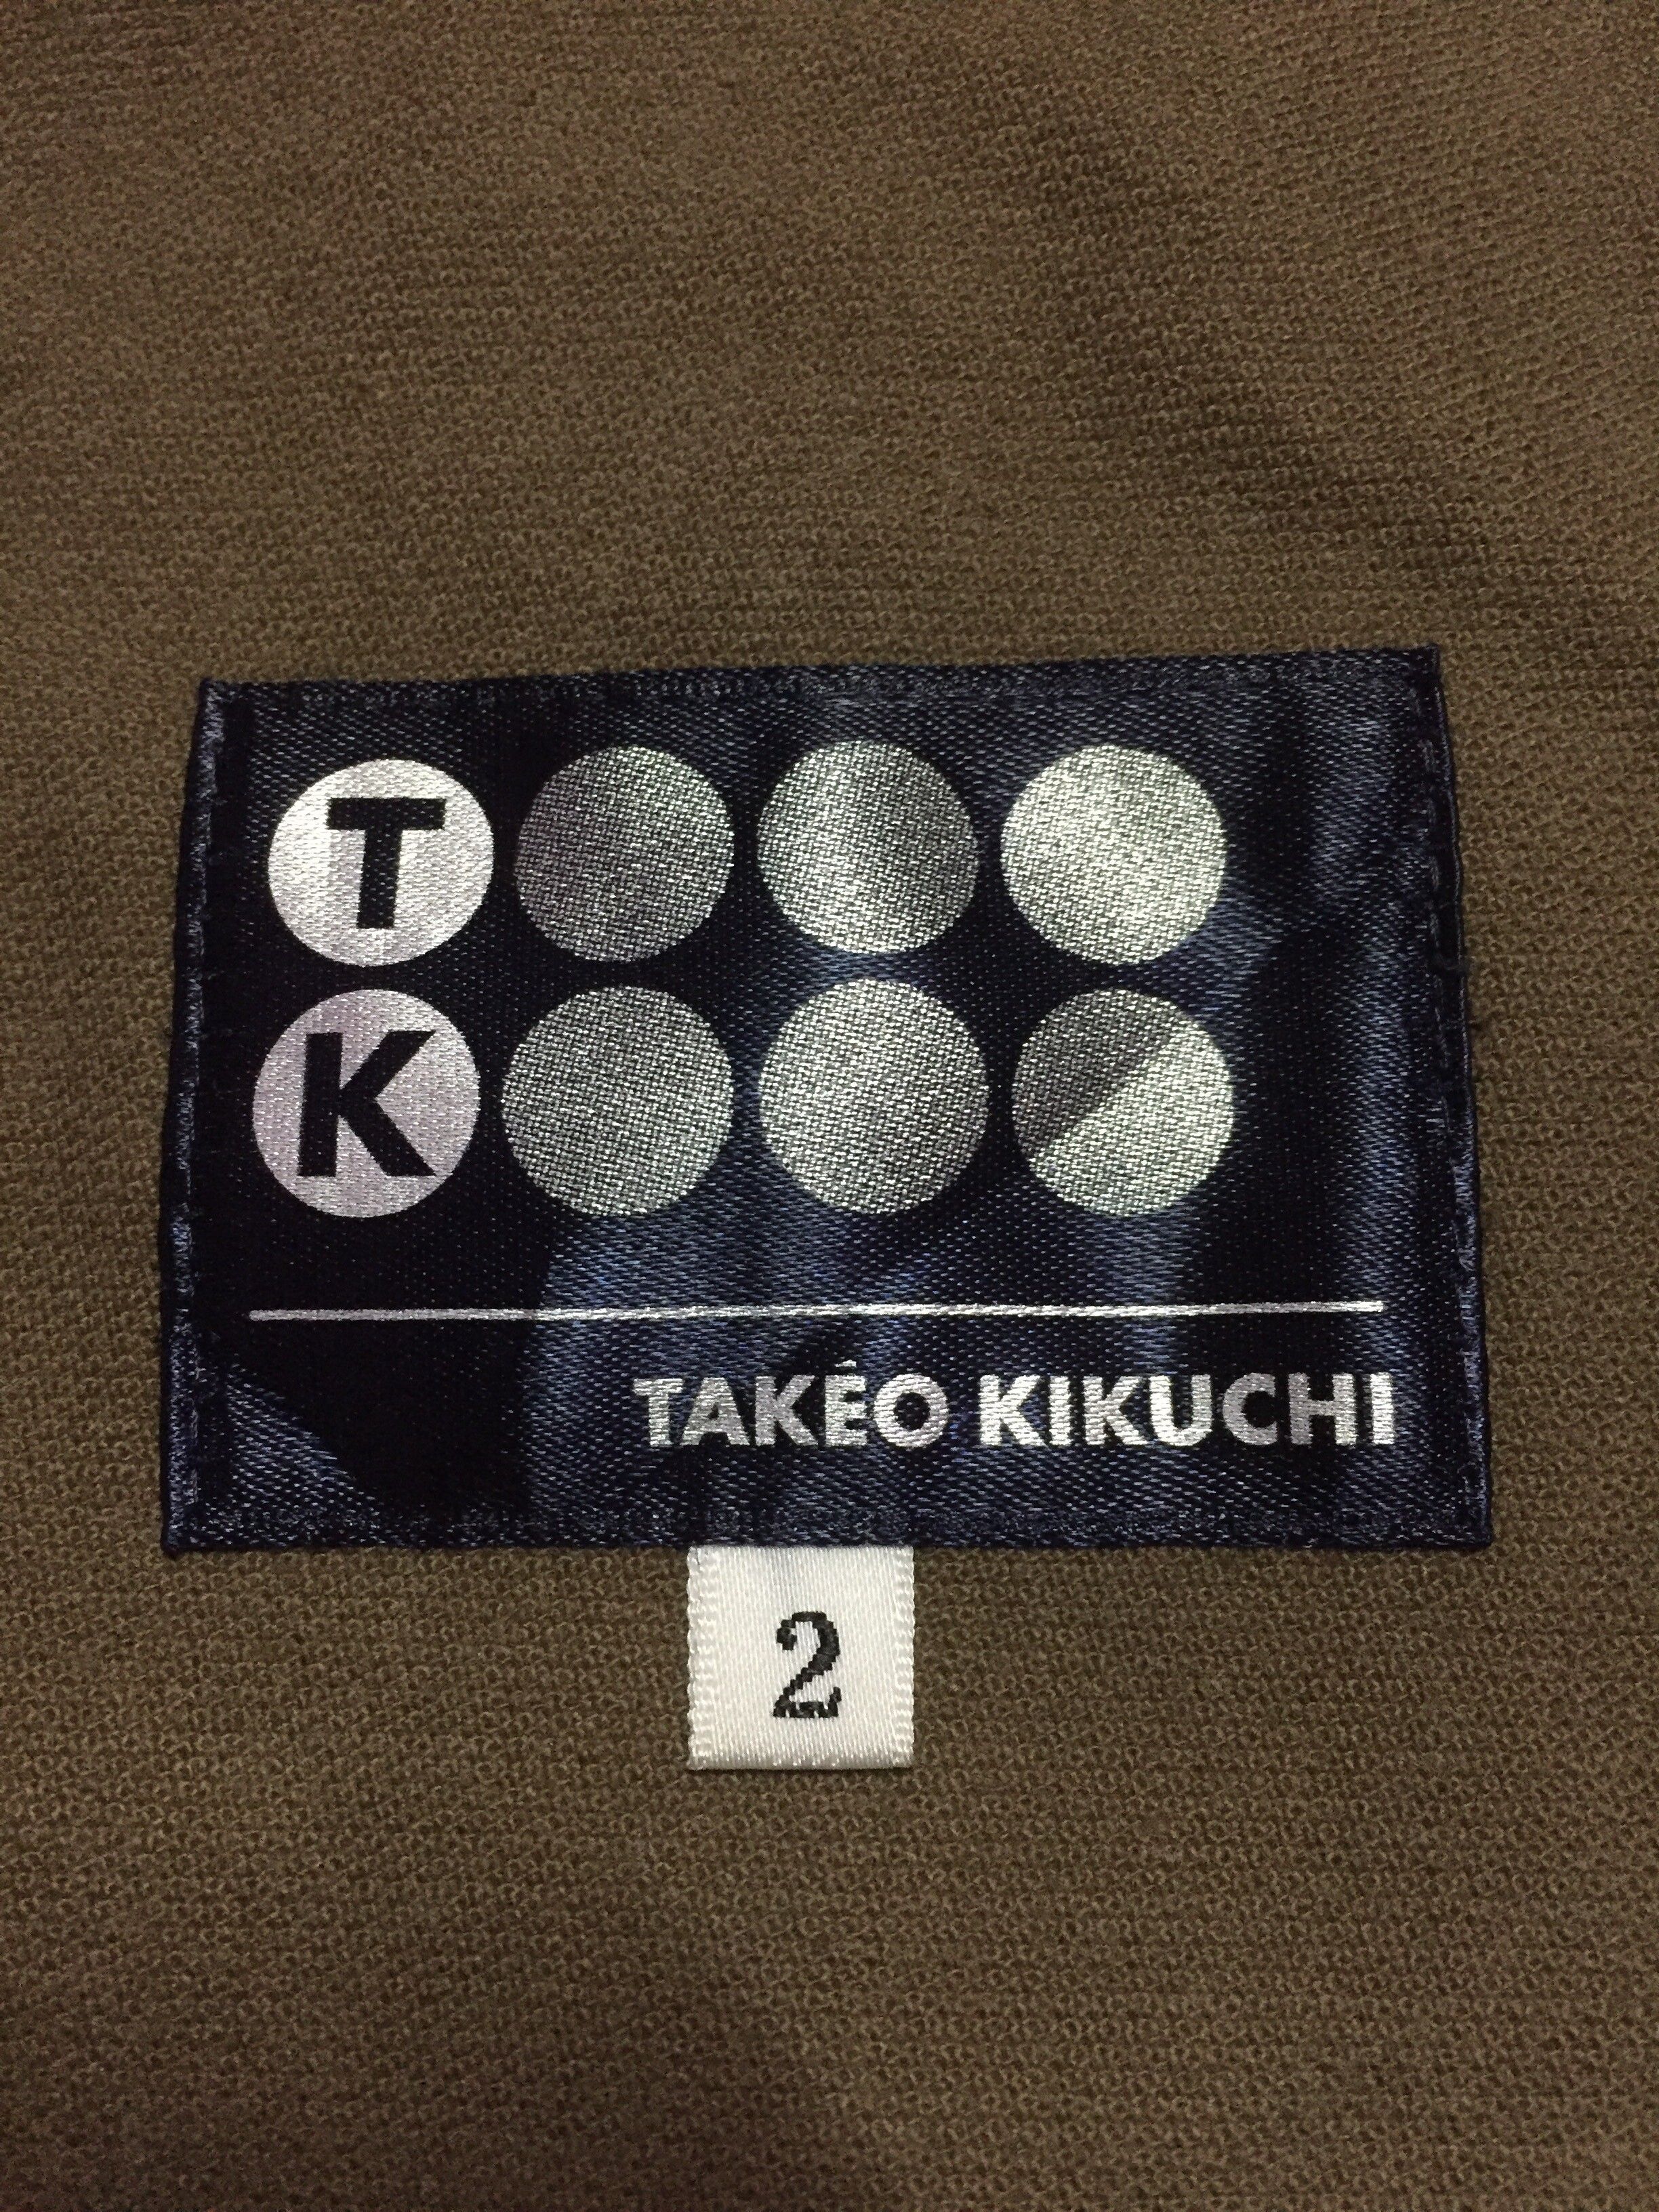 Takeo Kikuchi Vintage 90’s Takeo Kikuchi Jackets Size US M / EU 48-50 / 2 - 4 Thumbnail